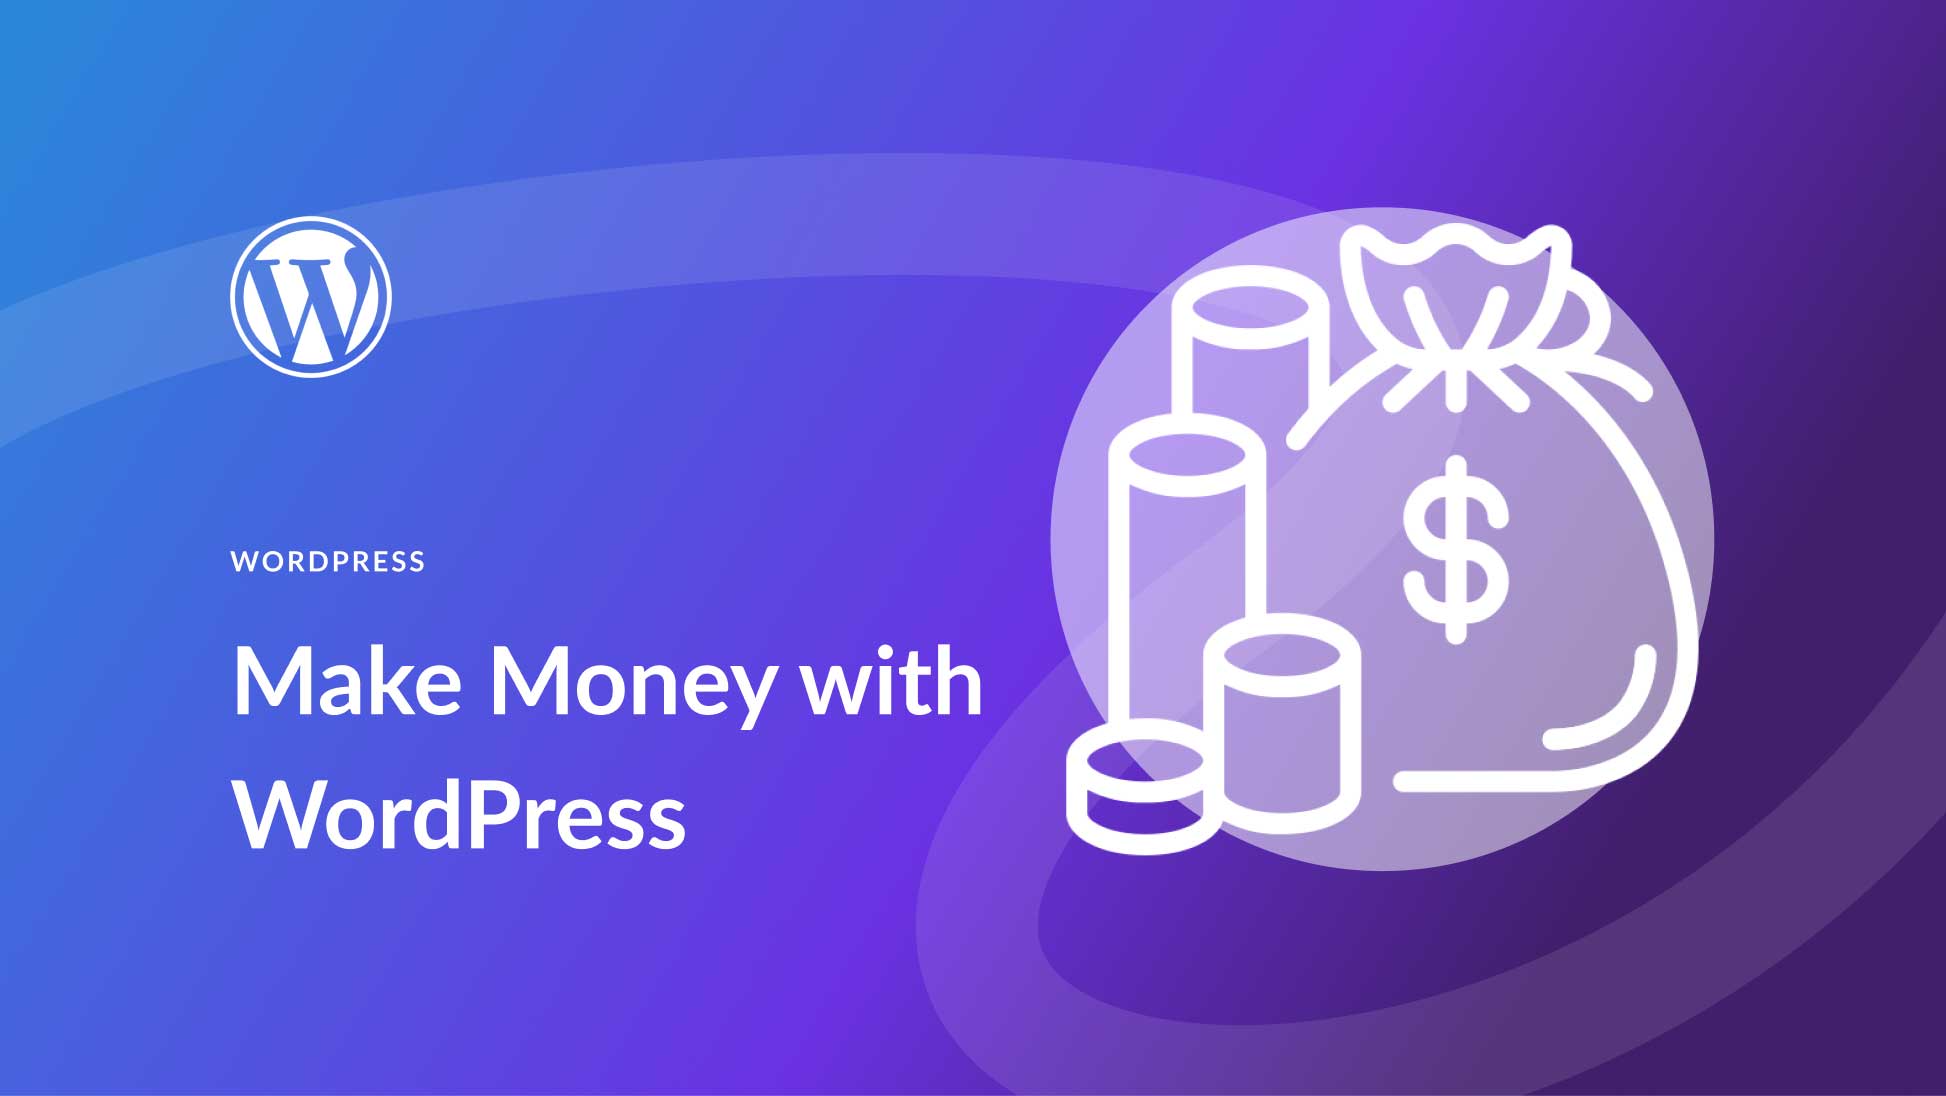 Make Money with WordPress: The Ultimate List of WordPress Business Ideas